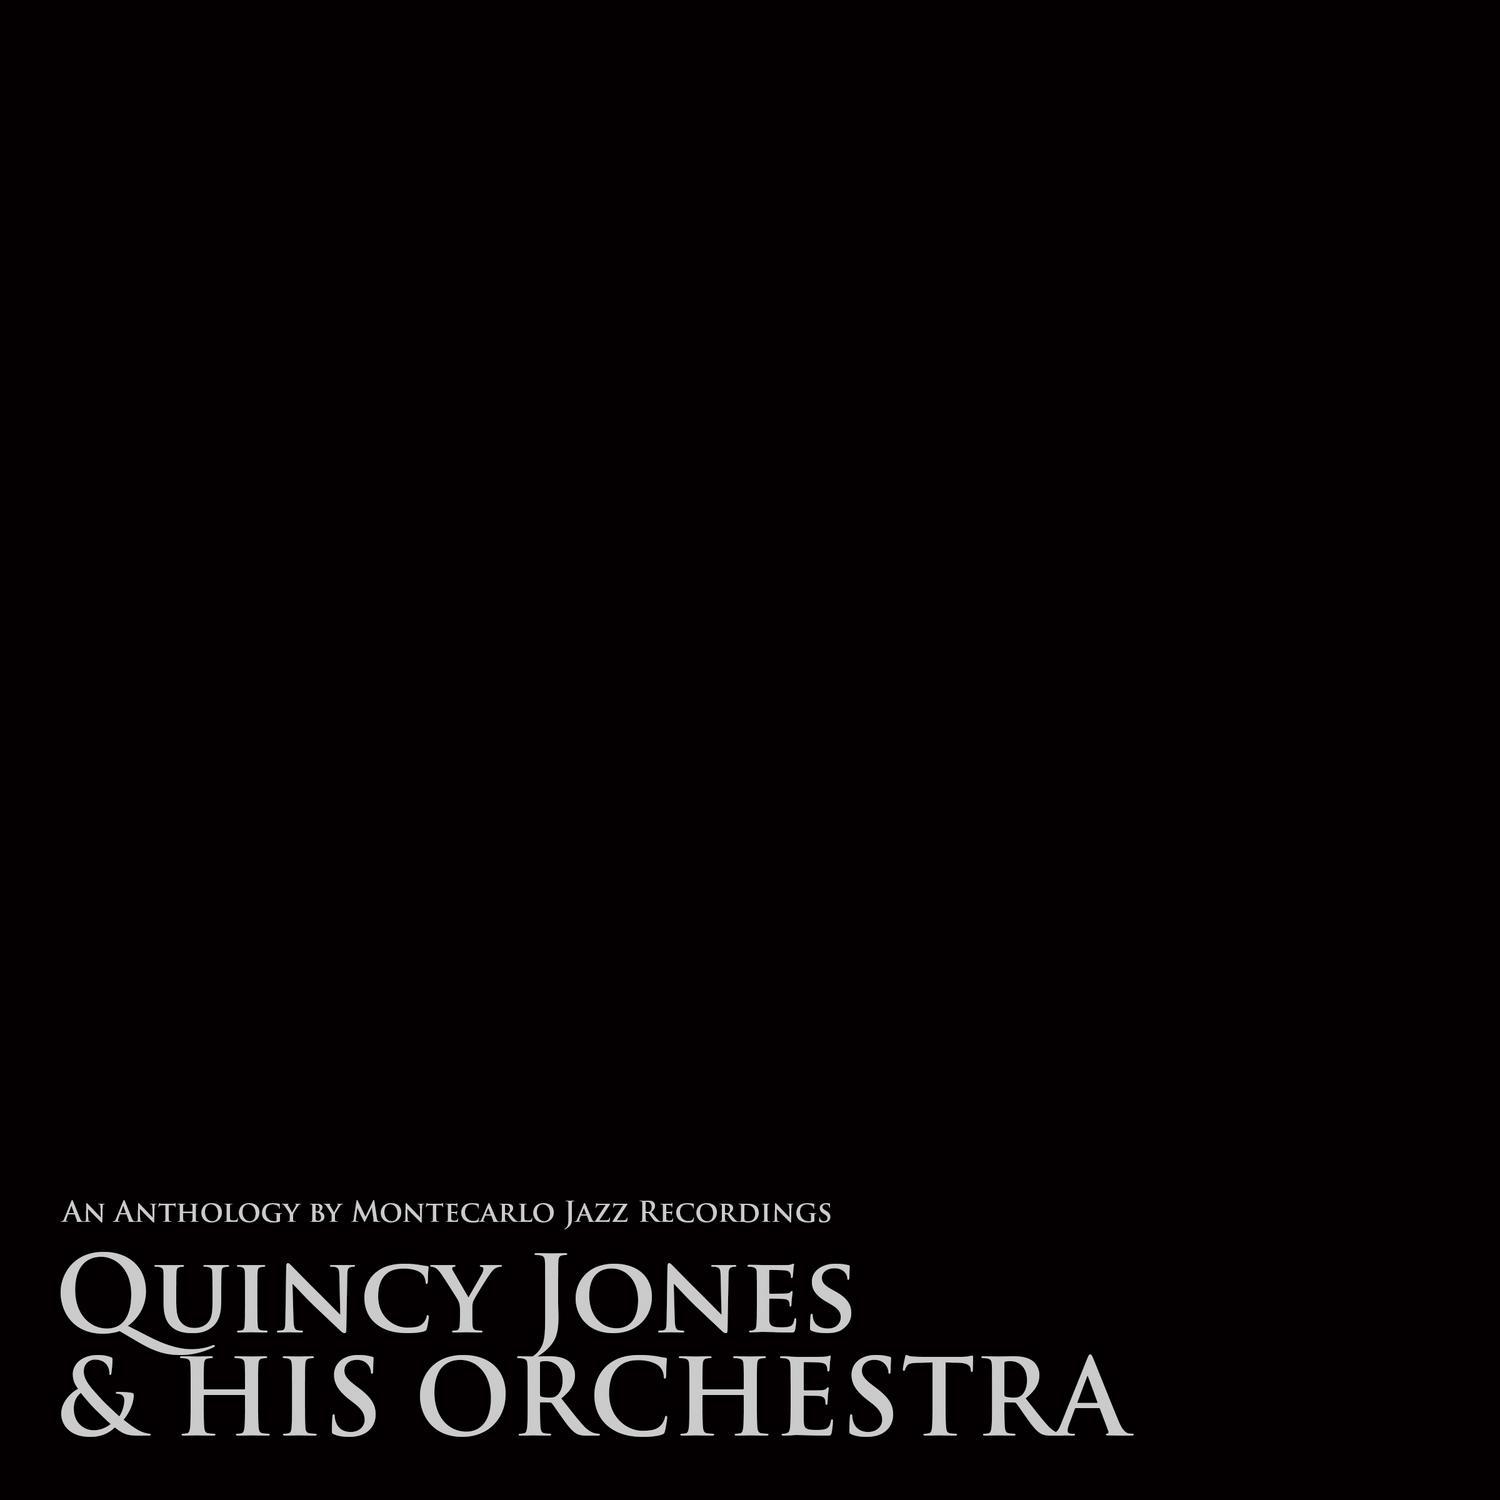 Quincy Jones - The Quintessence